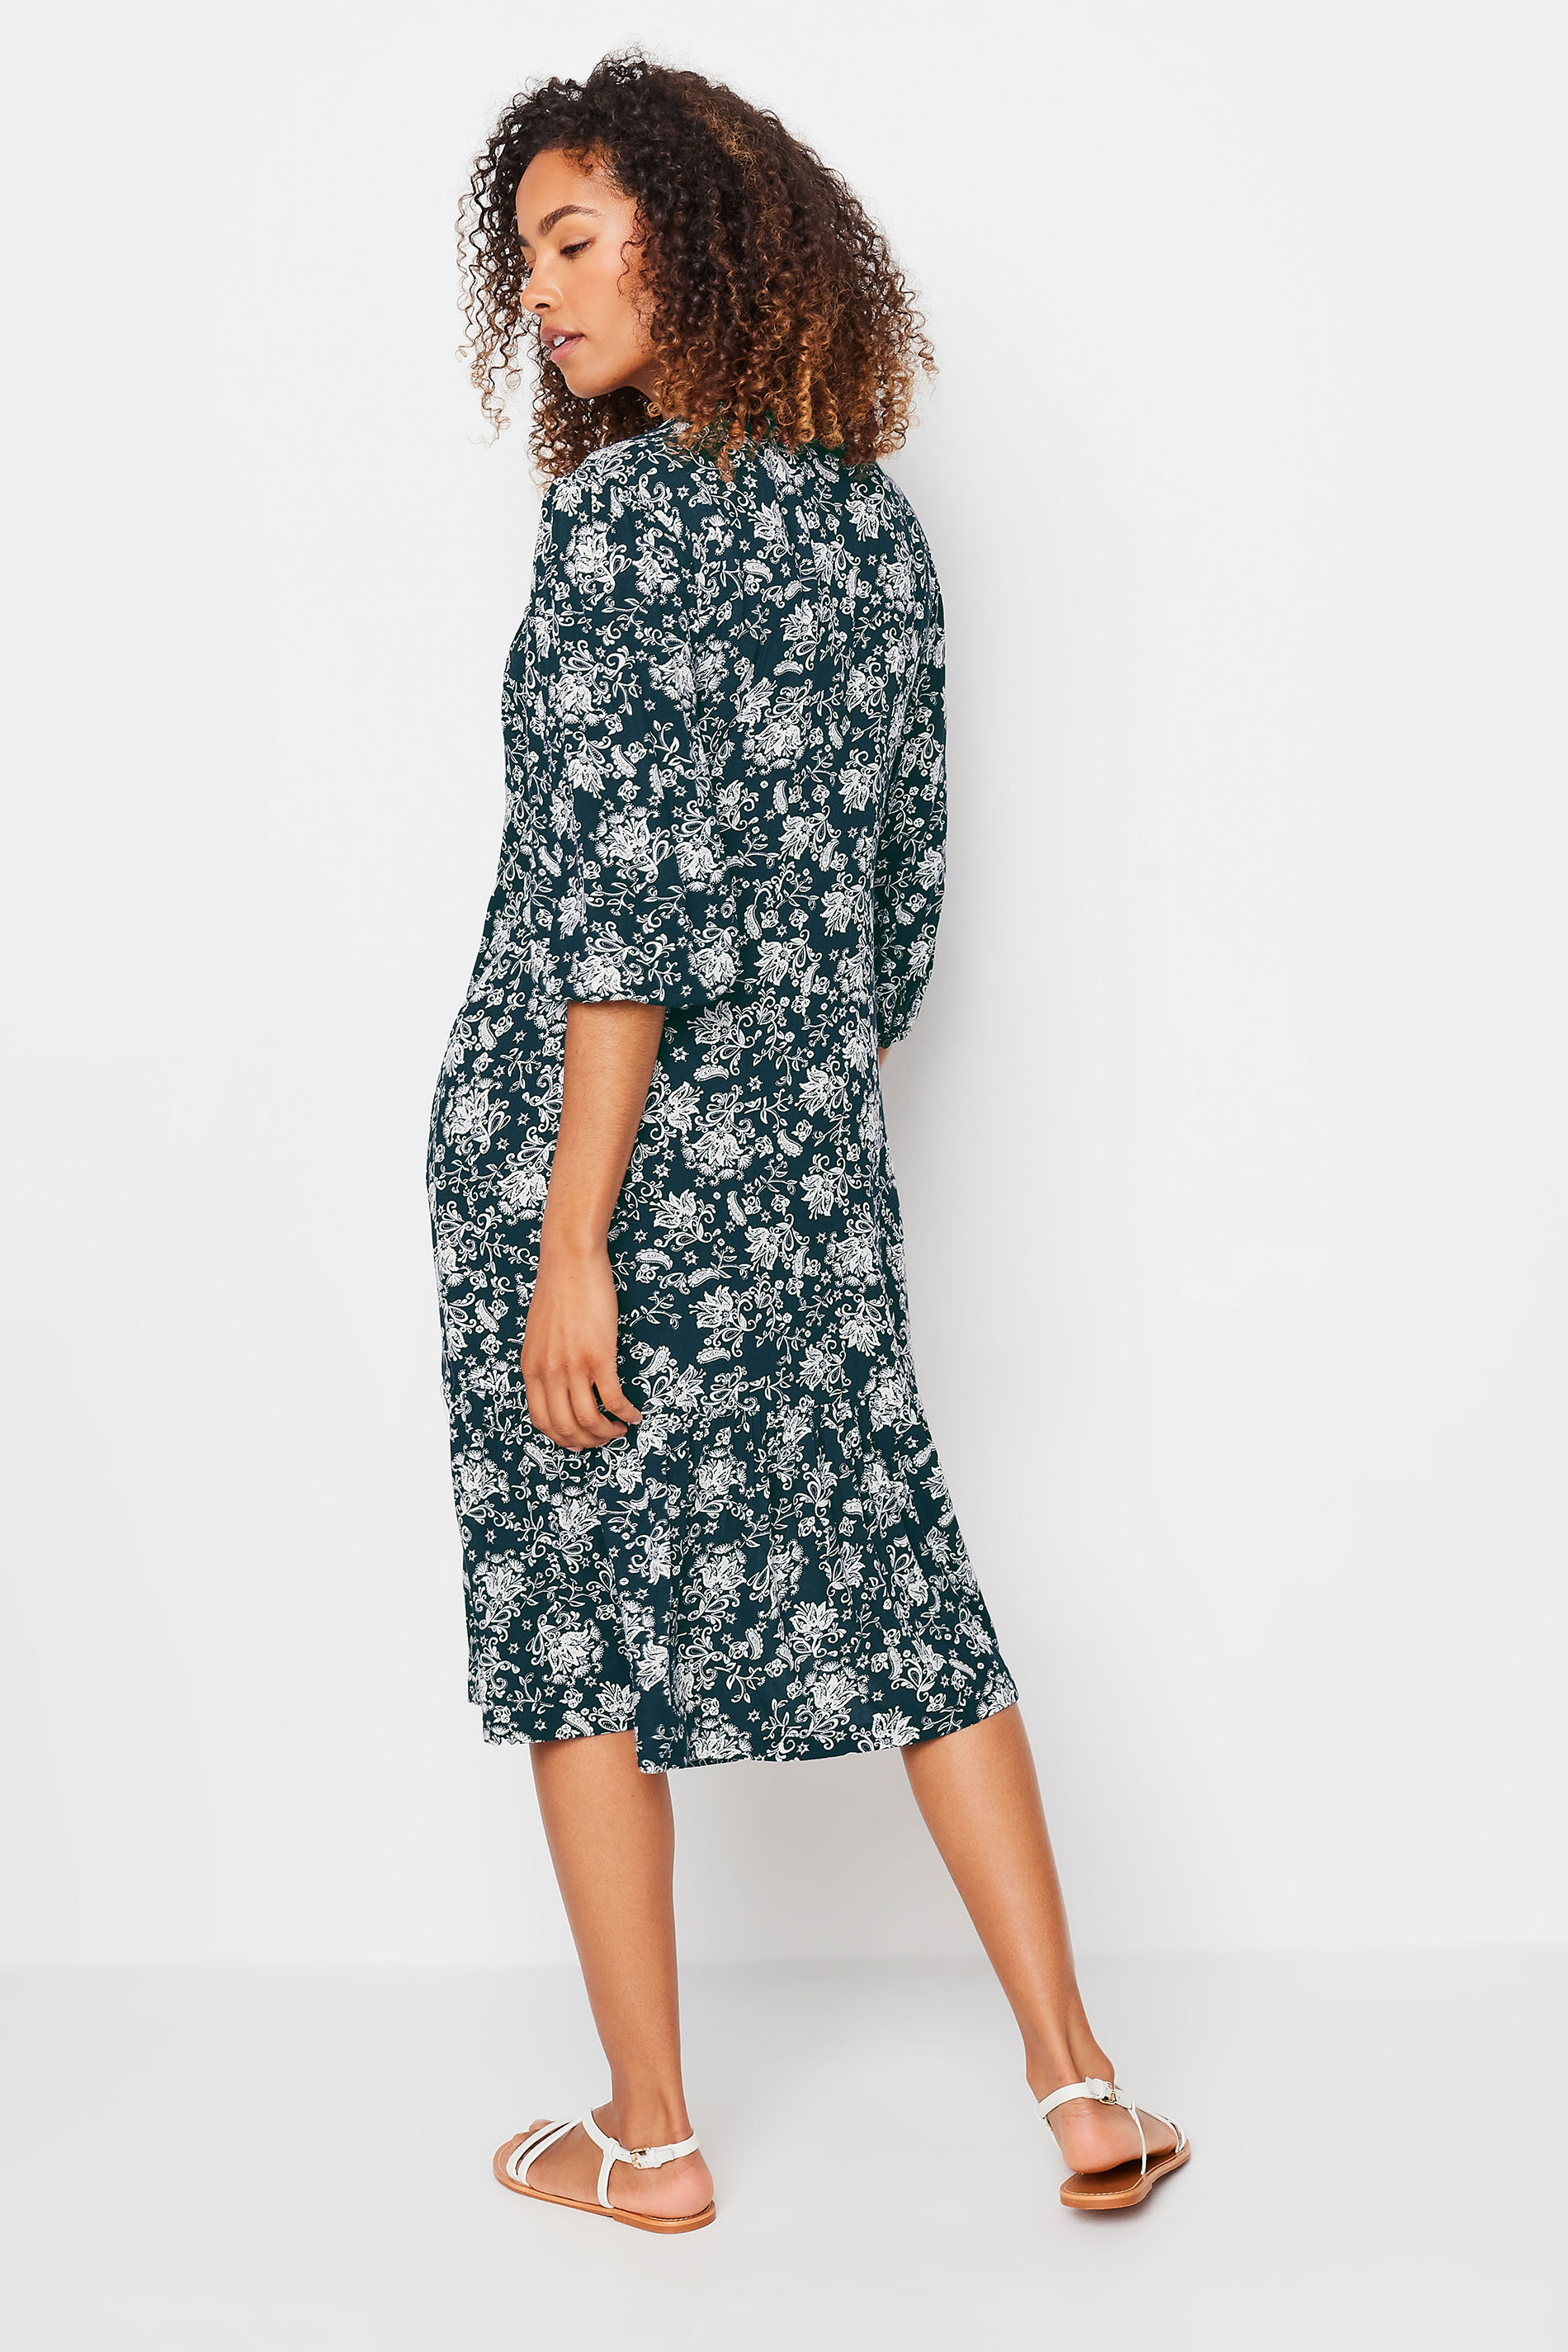 M&Co Navy Blue Damask Print Lace Trim Dress | M&Co 3